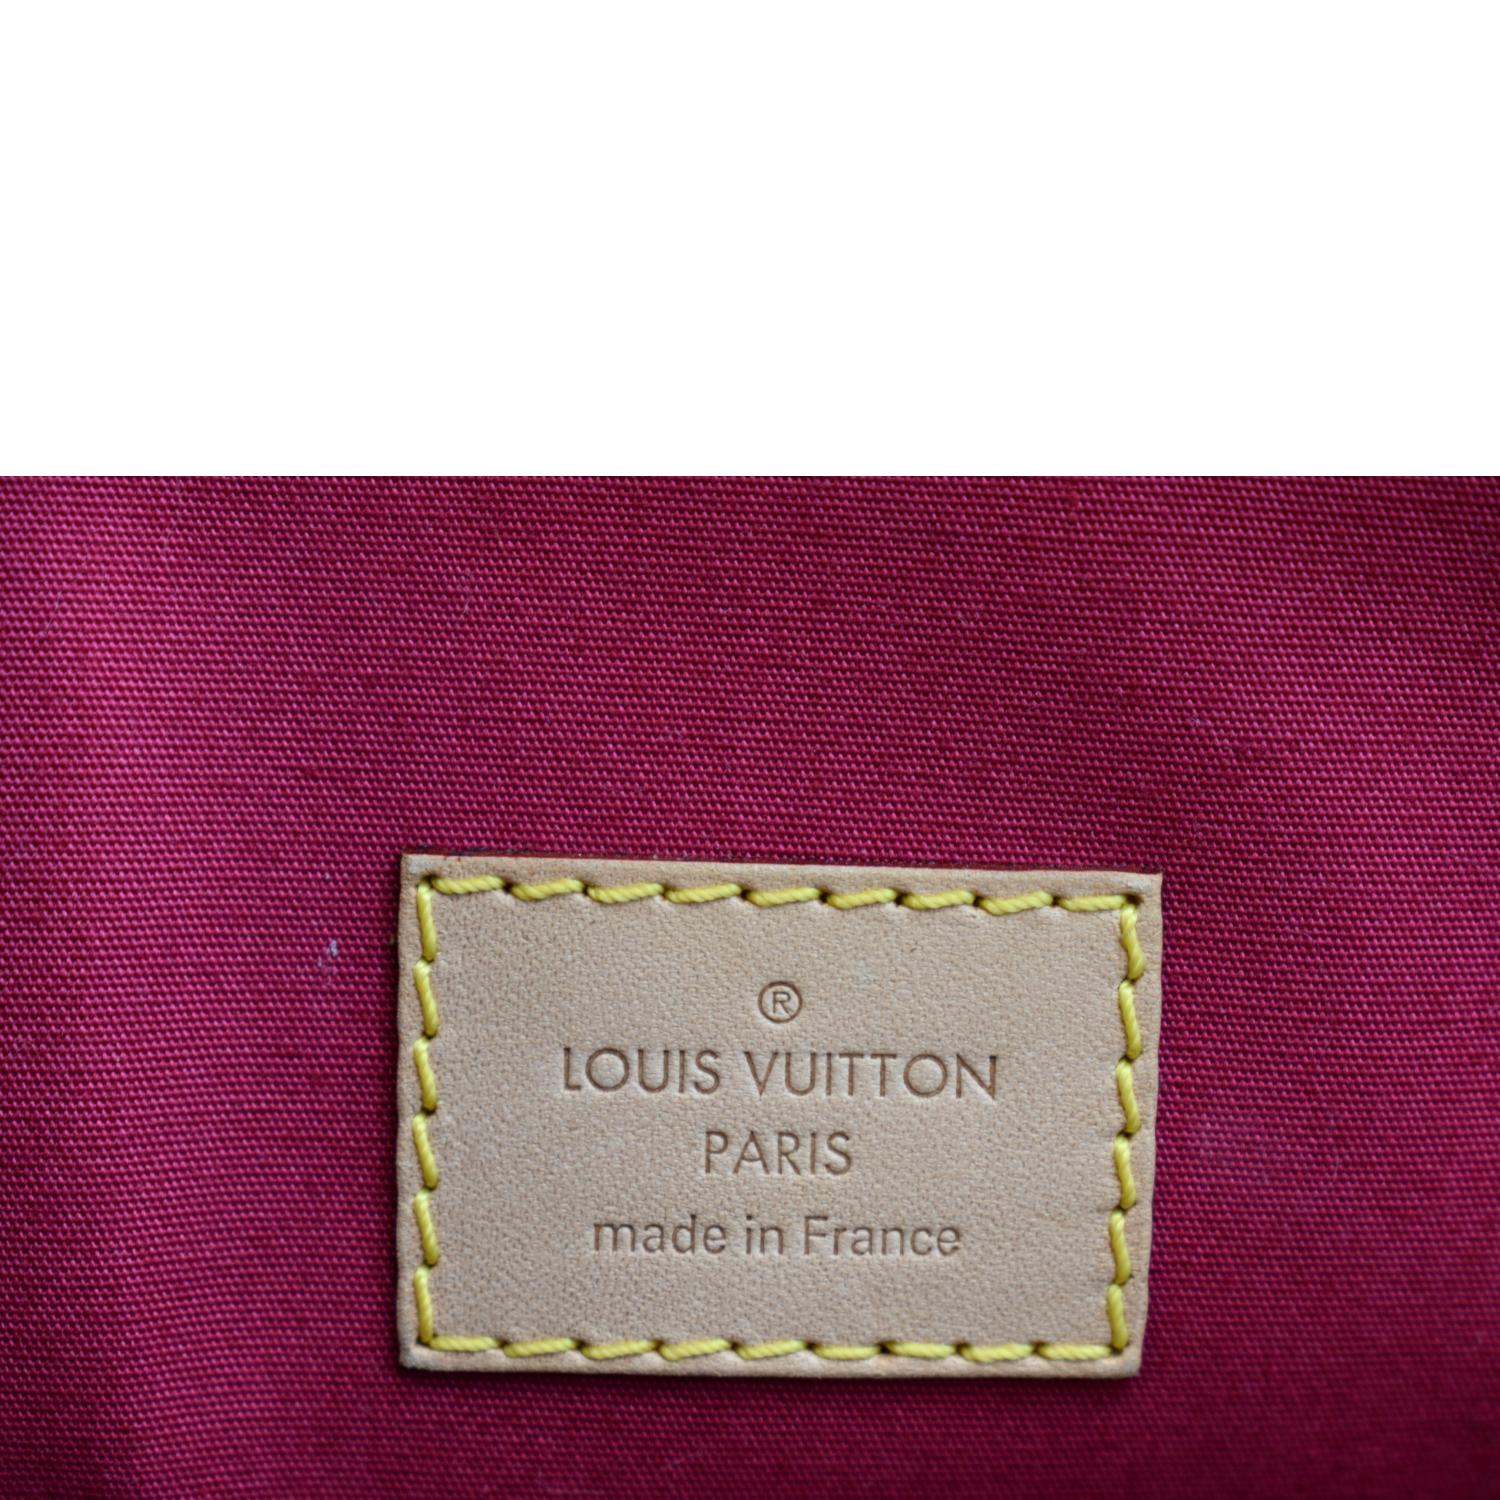 LOUIS VUITTON #39066 Alma Pink Monogram Vernis Satchel Bag – ALL